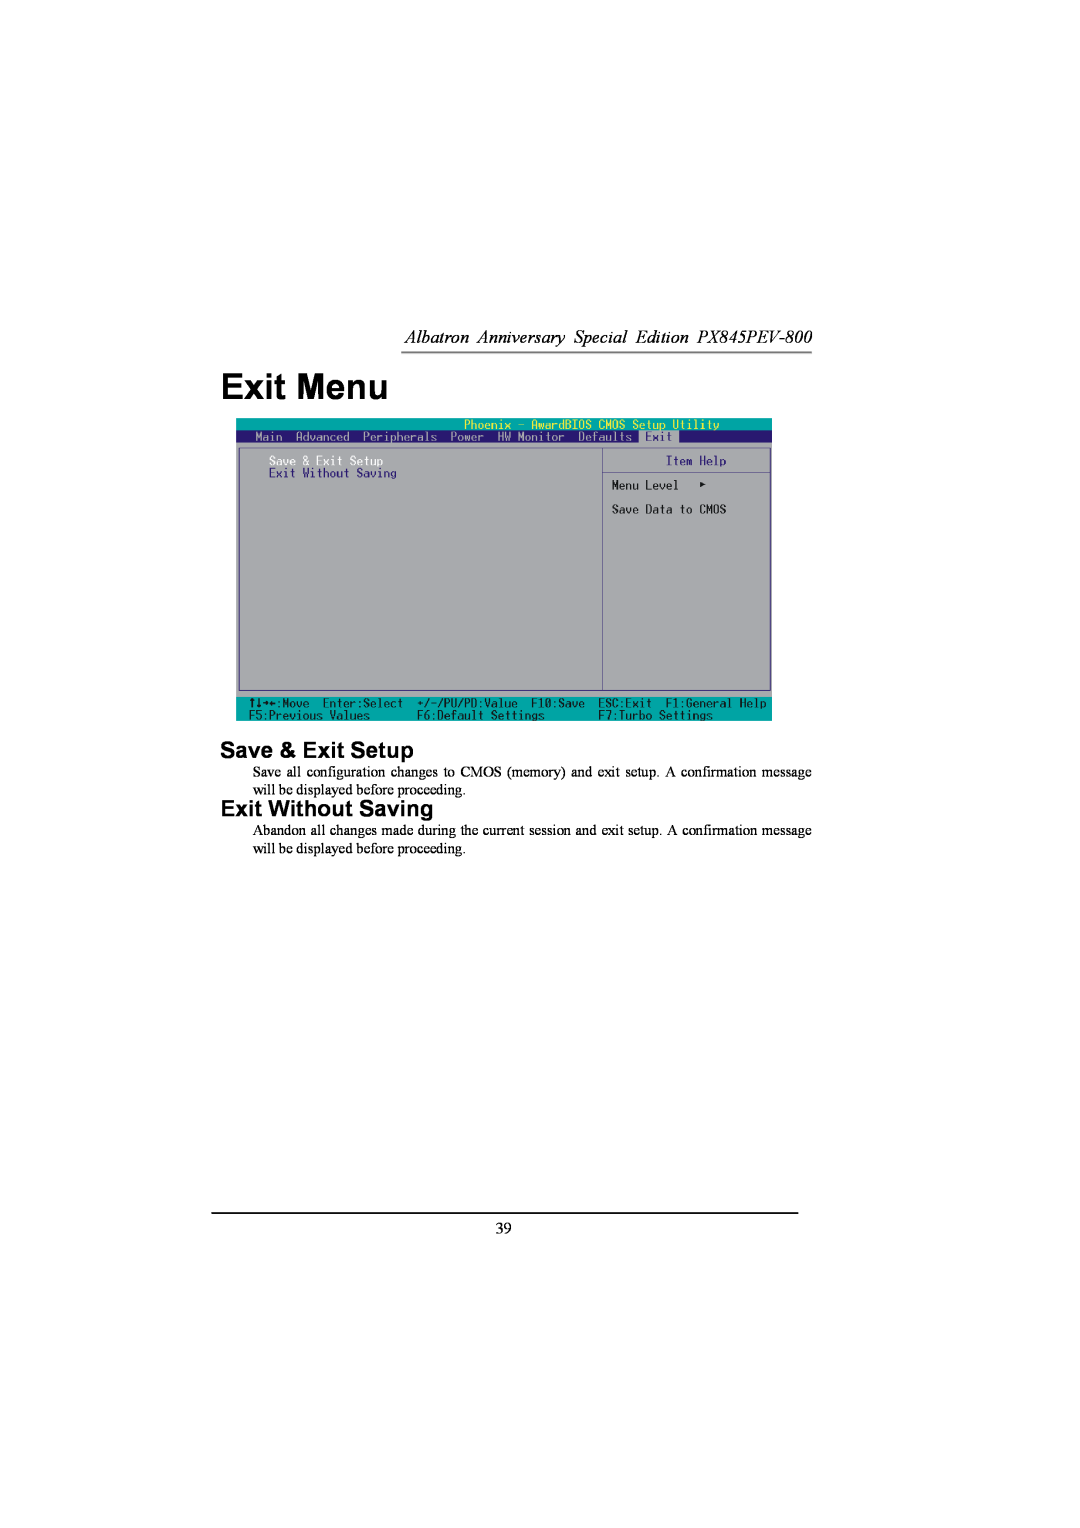 Albatron Technology PX845PEV-800 manual Exit Menu, Save & Exit Setup, Exit Without Saving 